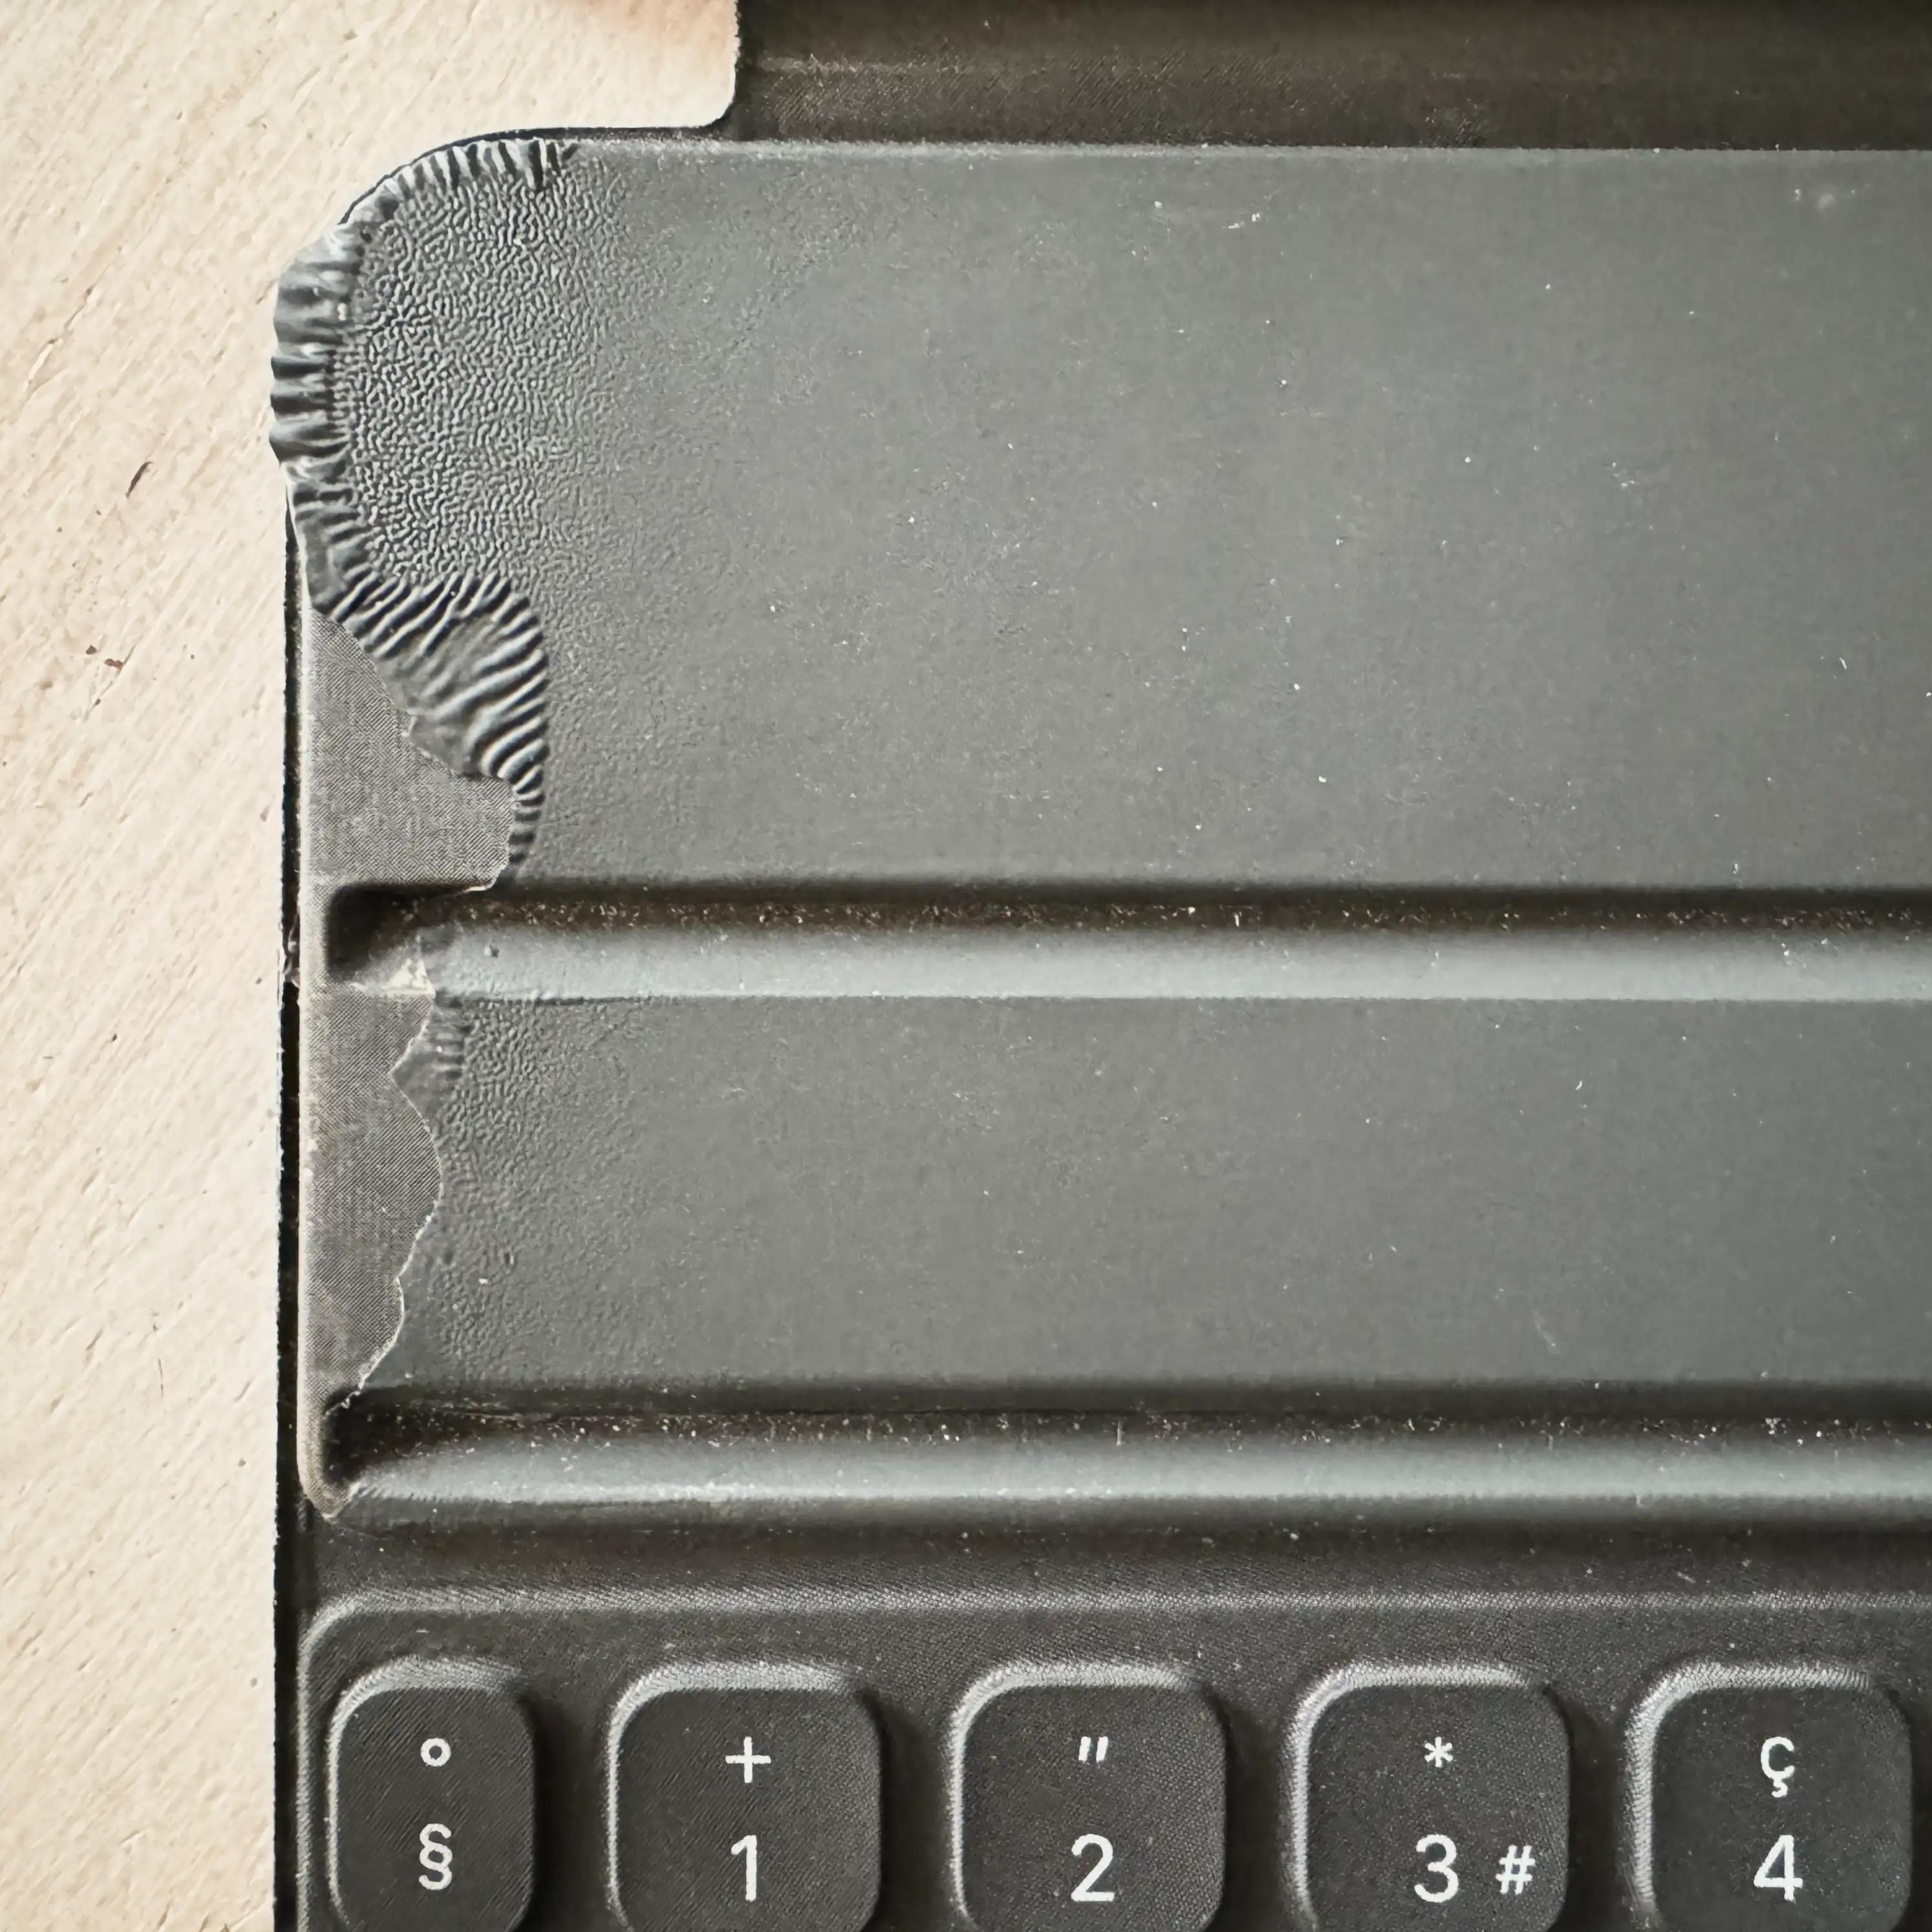 Top left inner corner of Smart Folio Keyboard peeling